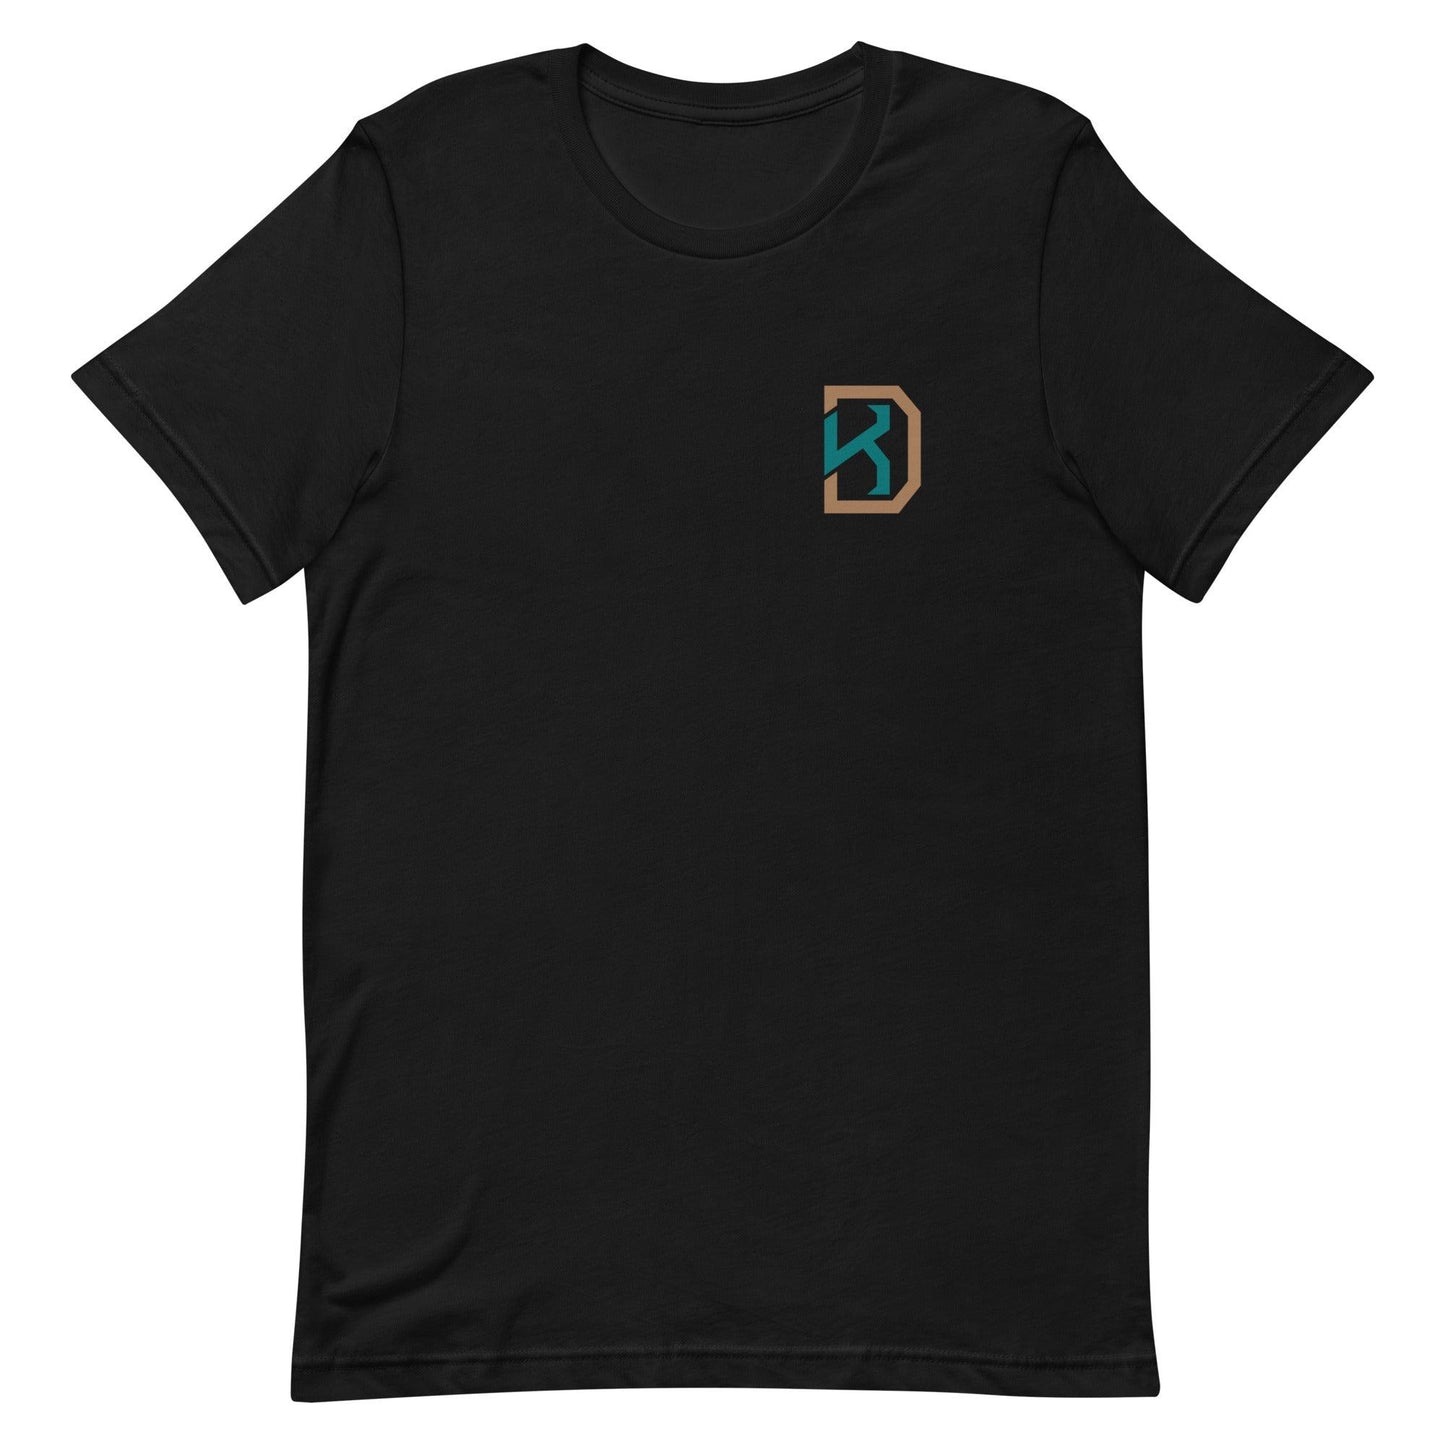 Kyre Duplessis "Essential" t-shirt - Fan Arch